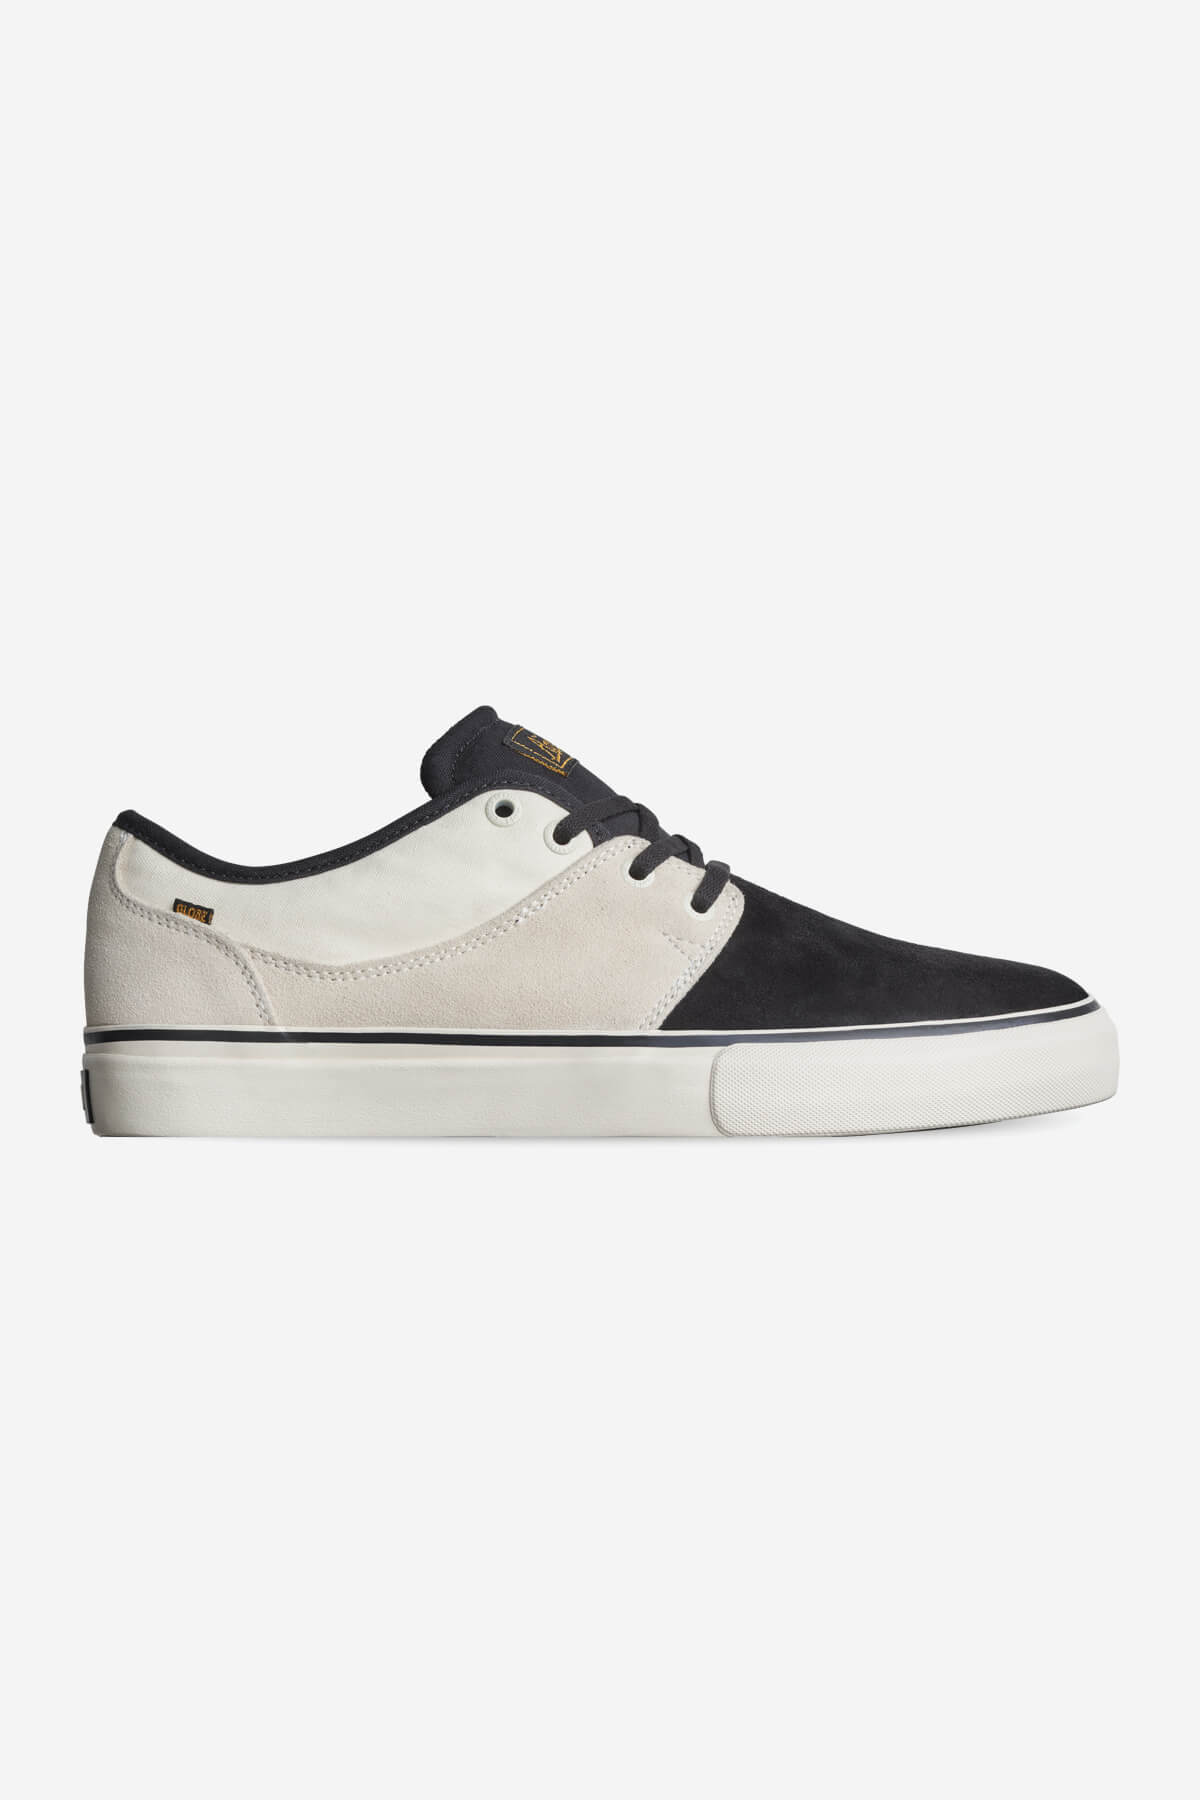 mahalo noir off white skateboard  chaussures